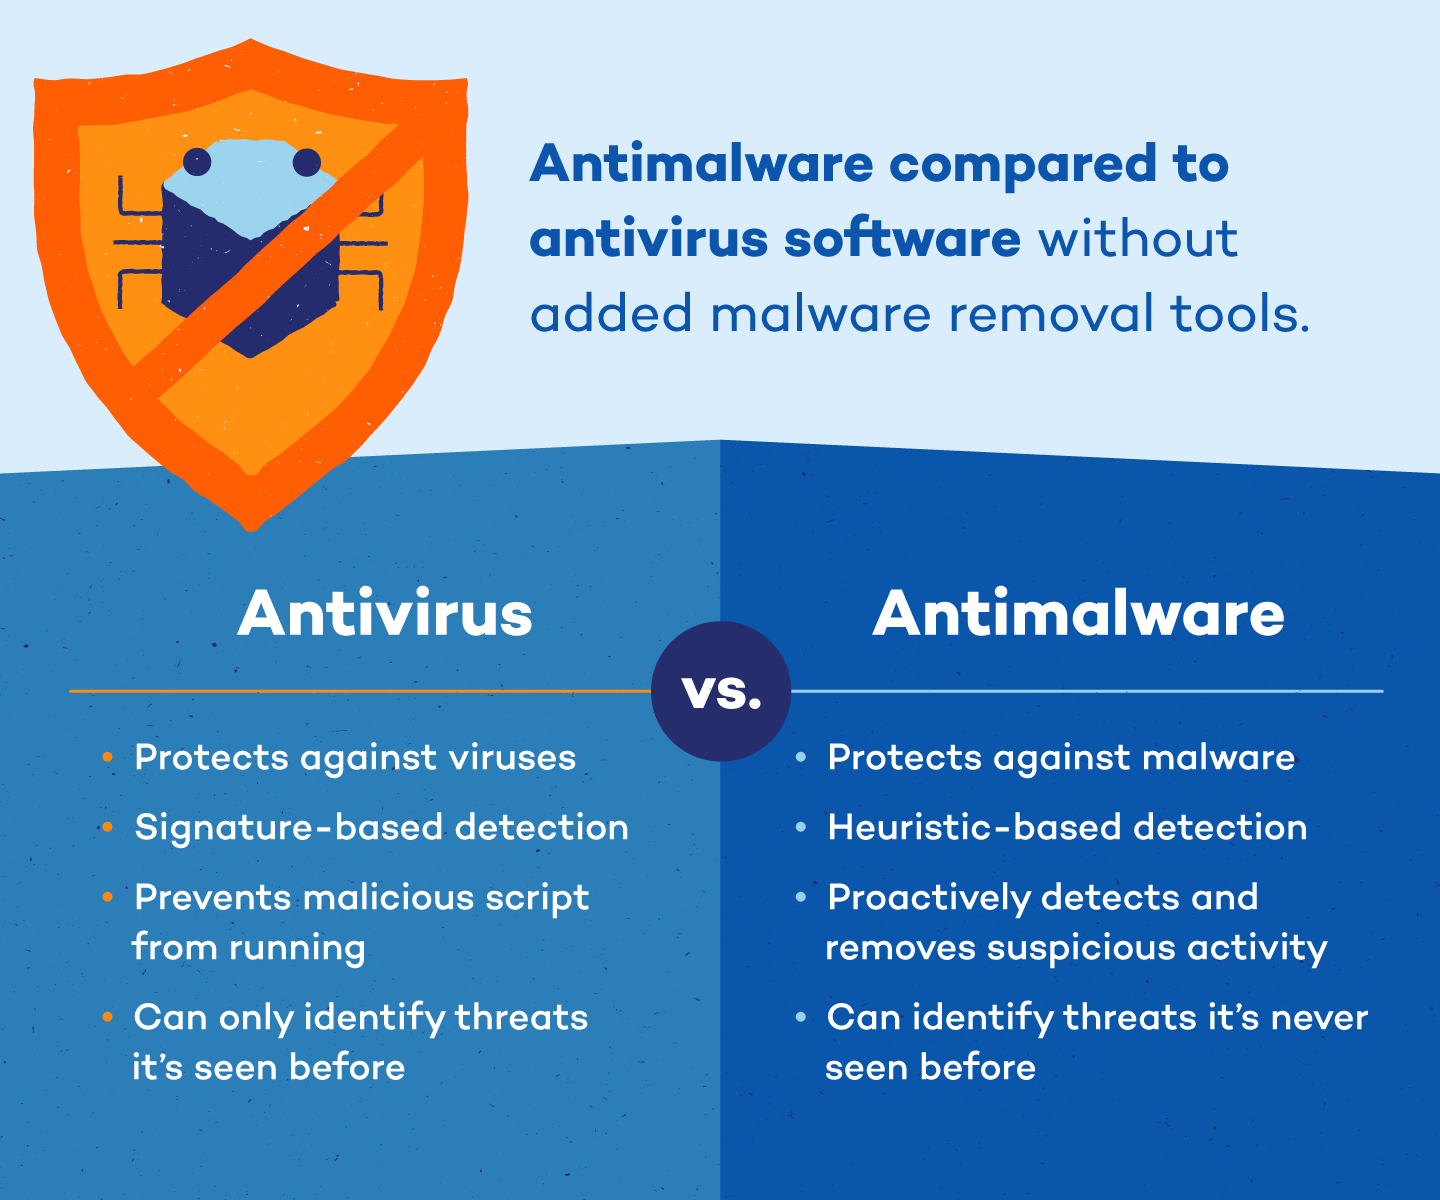 Use an Antivirus Program
Use an Anti-Malware Program